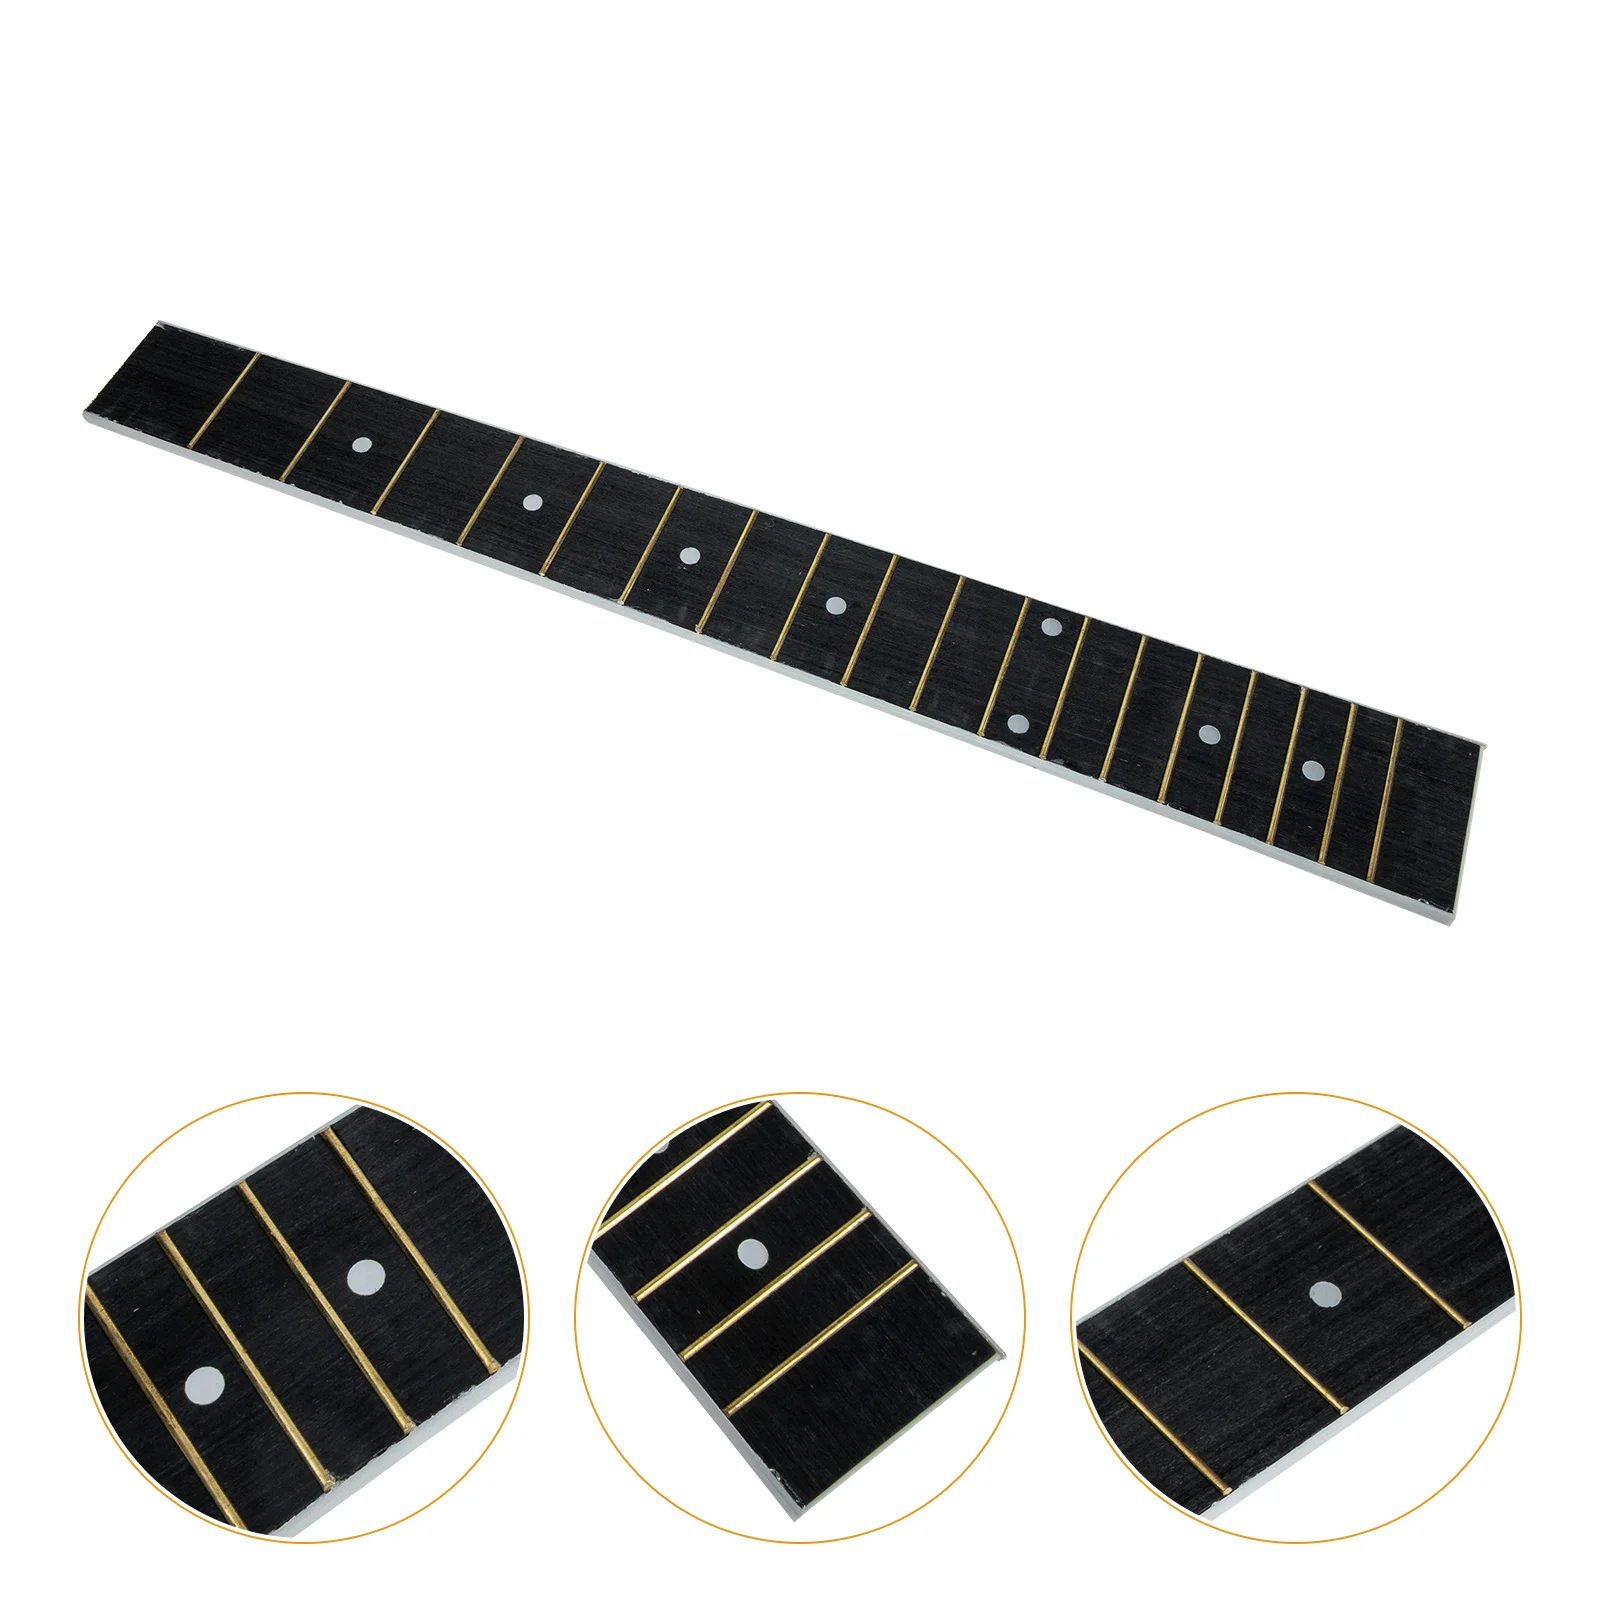 

Folk Guitar Wooden Fingerboard Ukulele Fingerboard 41-Inch Tech Wooden Fingerboard Replacement Fingerboard Repair Accessories